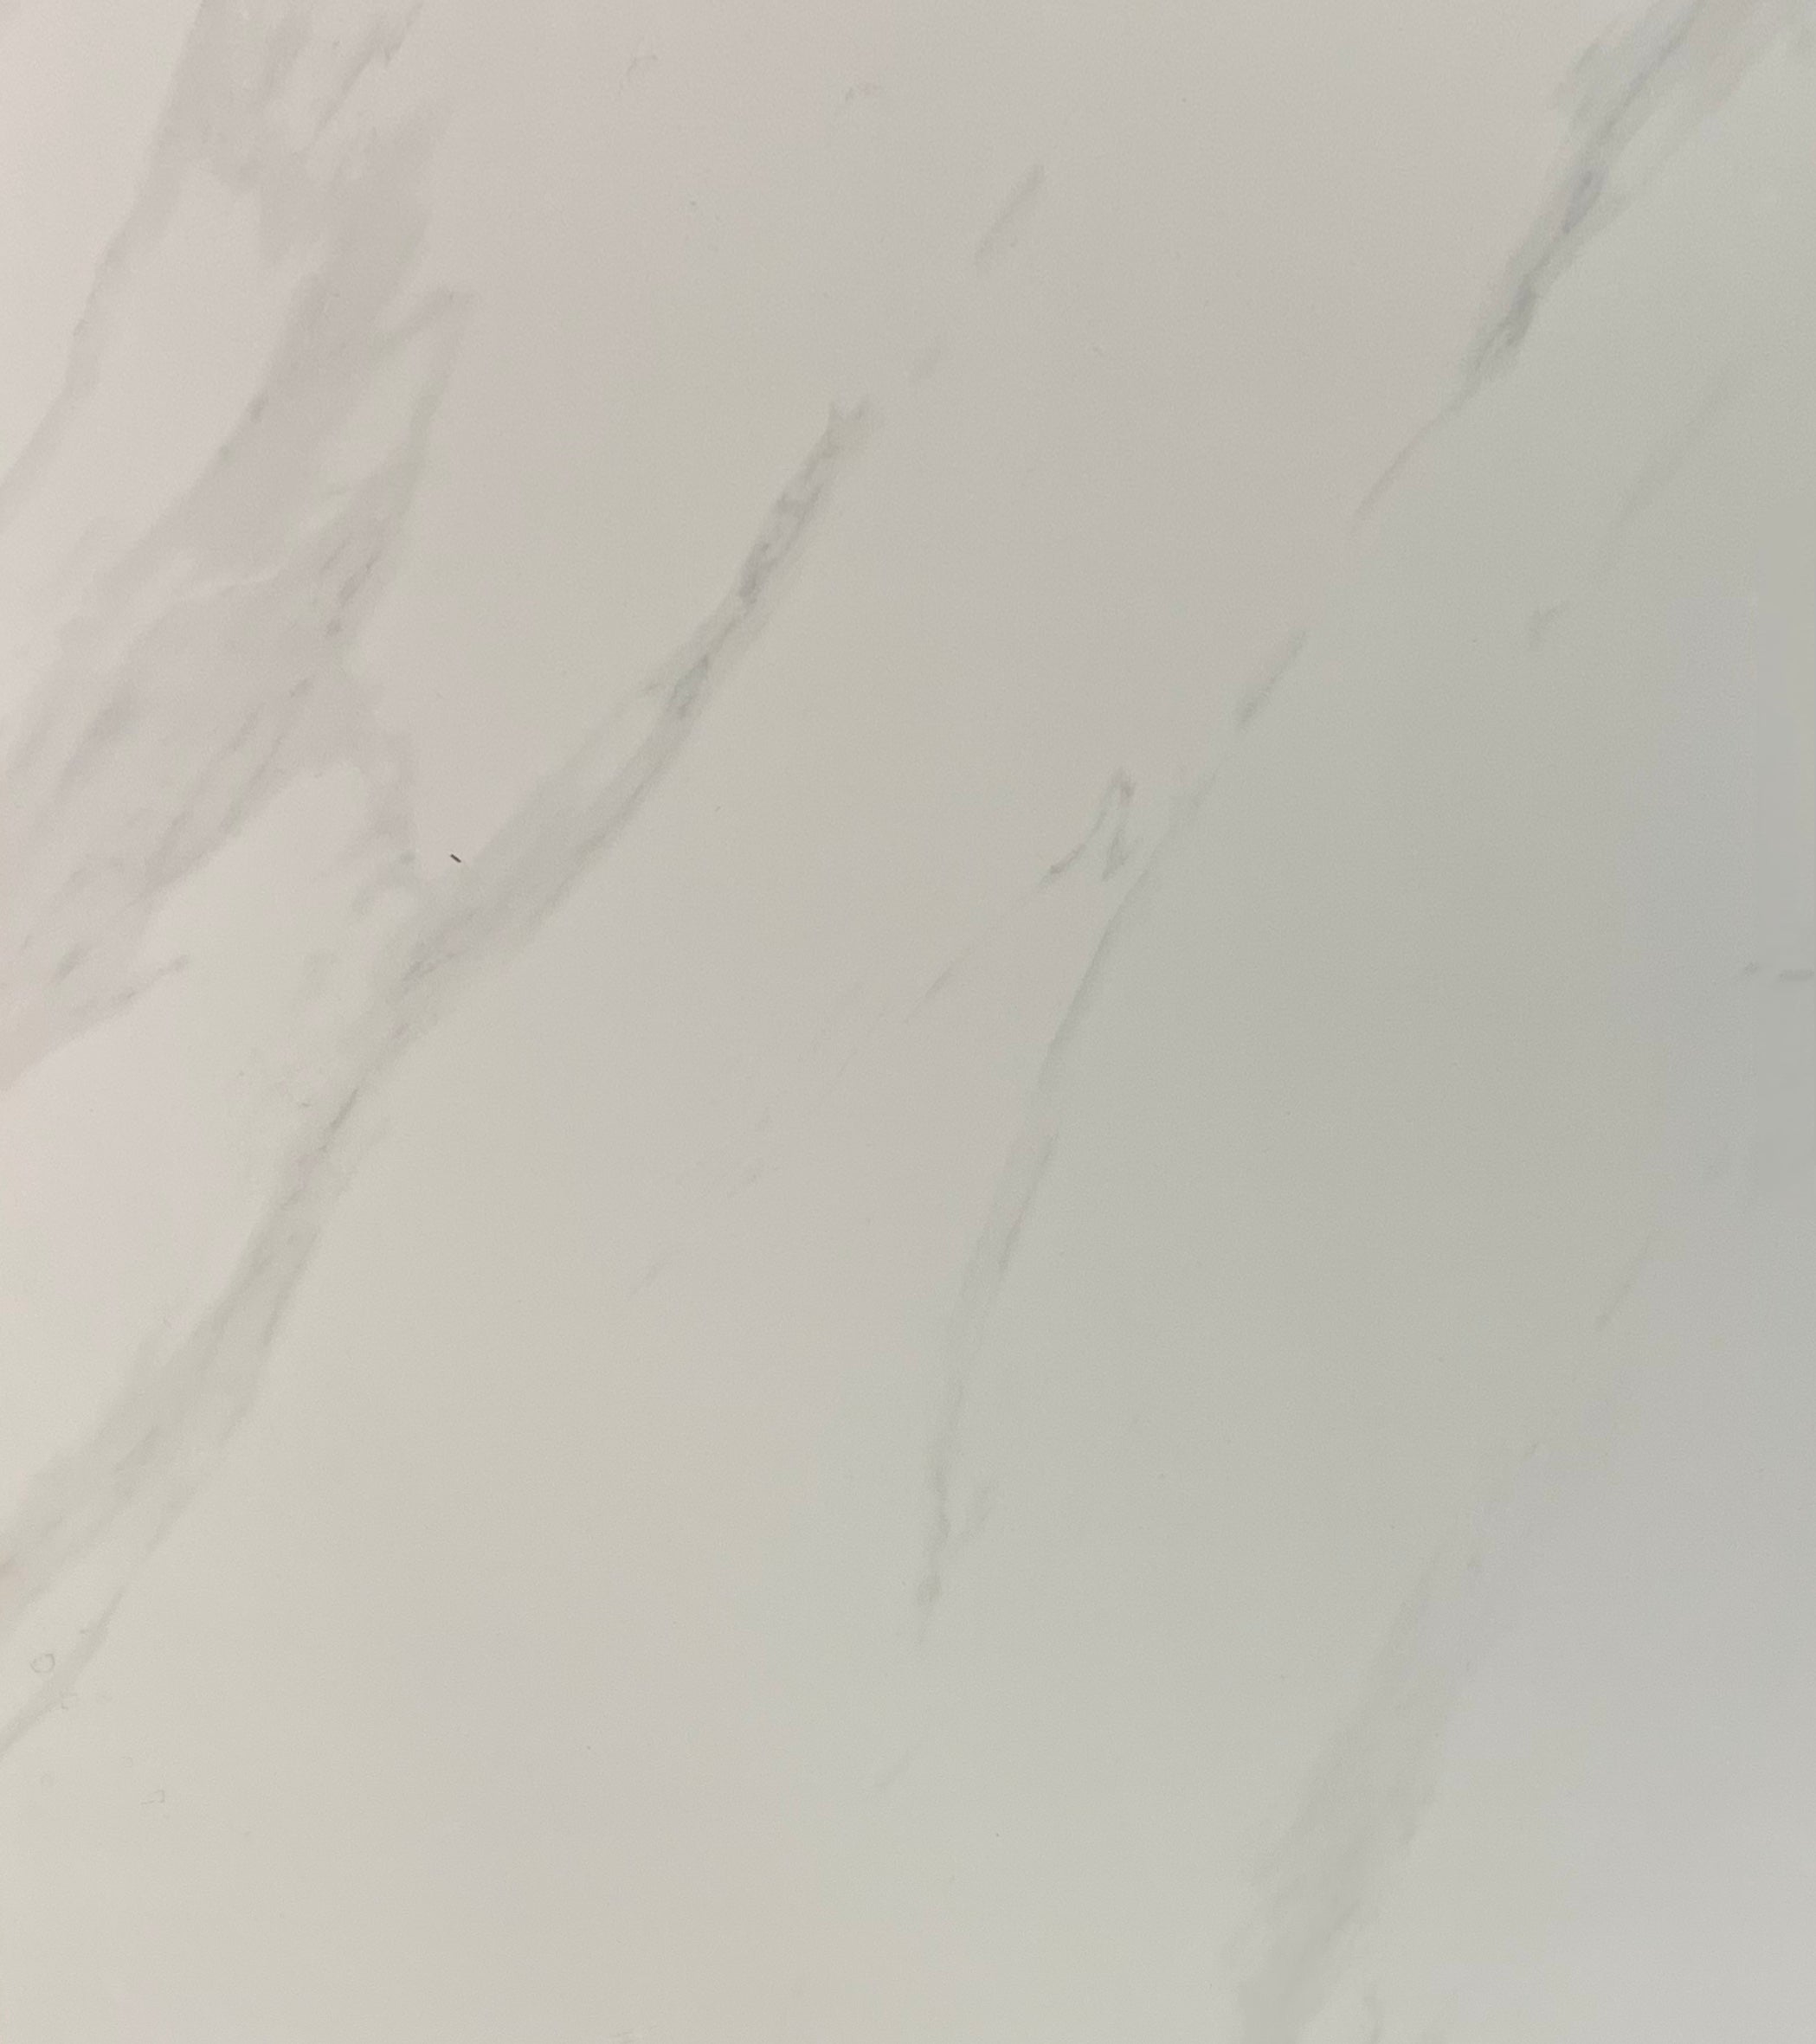 24"x24" Keolin Nuvo Carrara Polished Tile $3.99/sf 16 sf/box